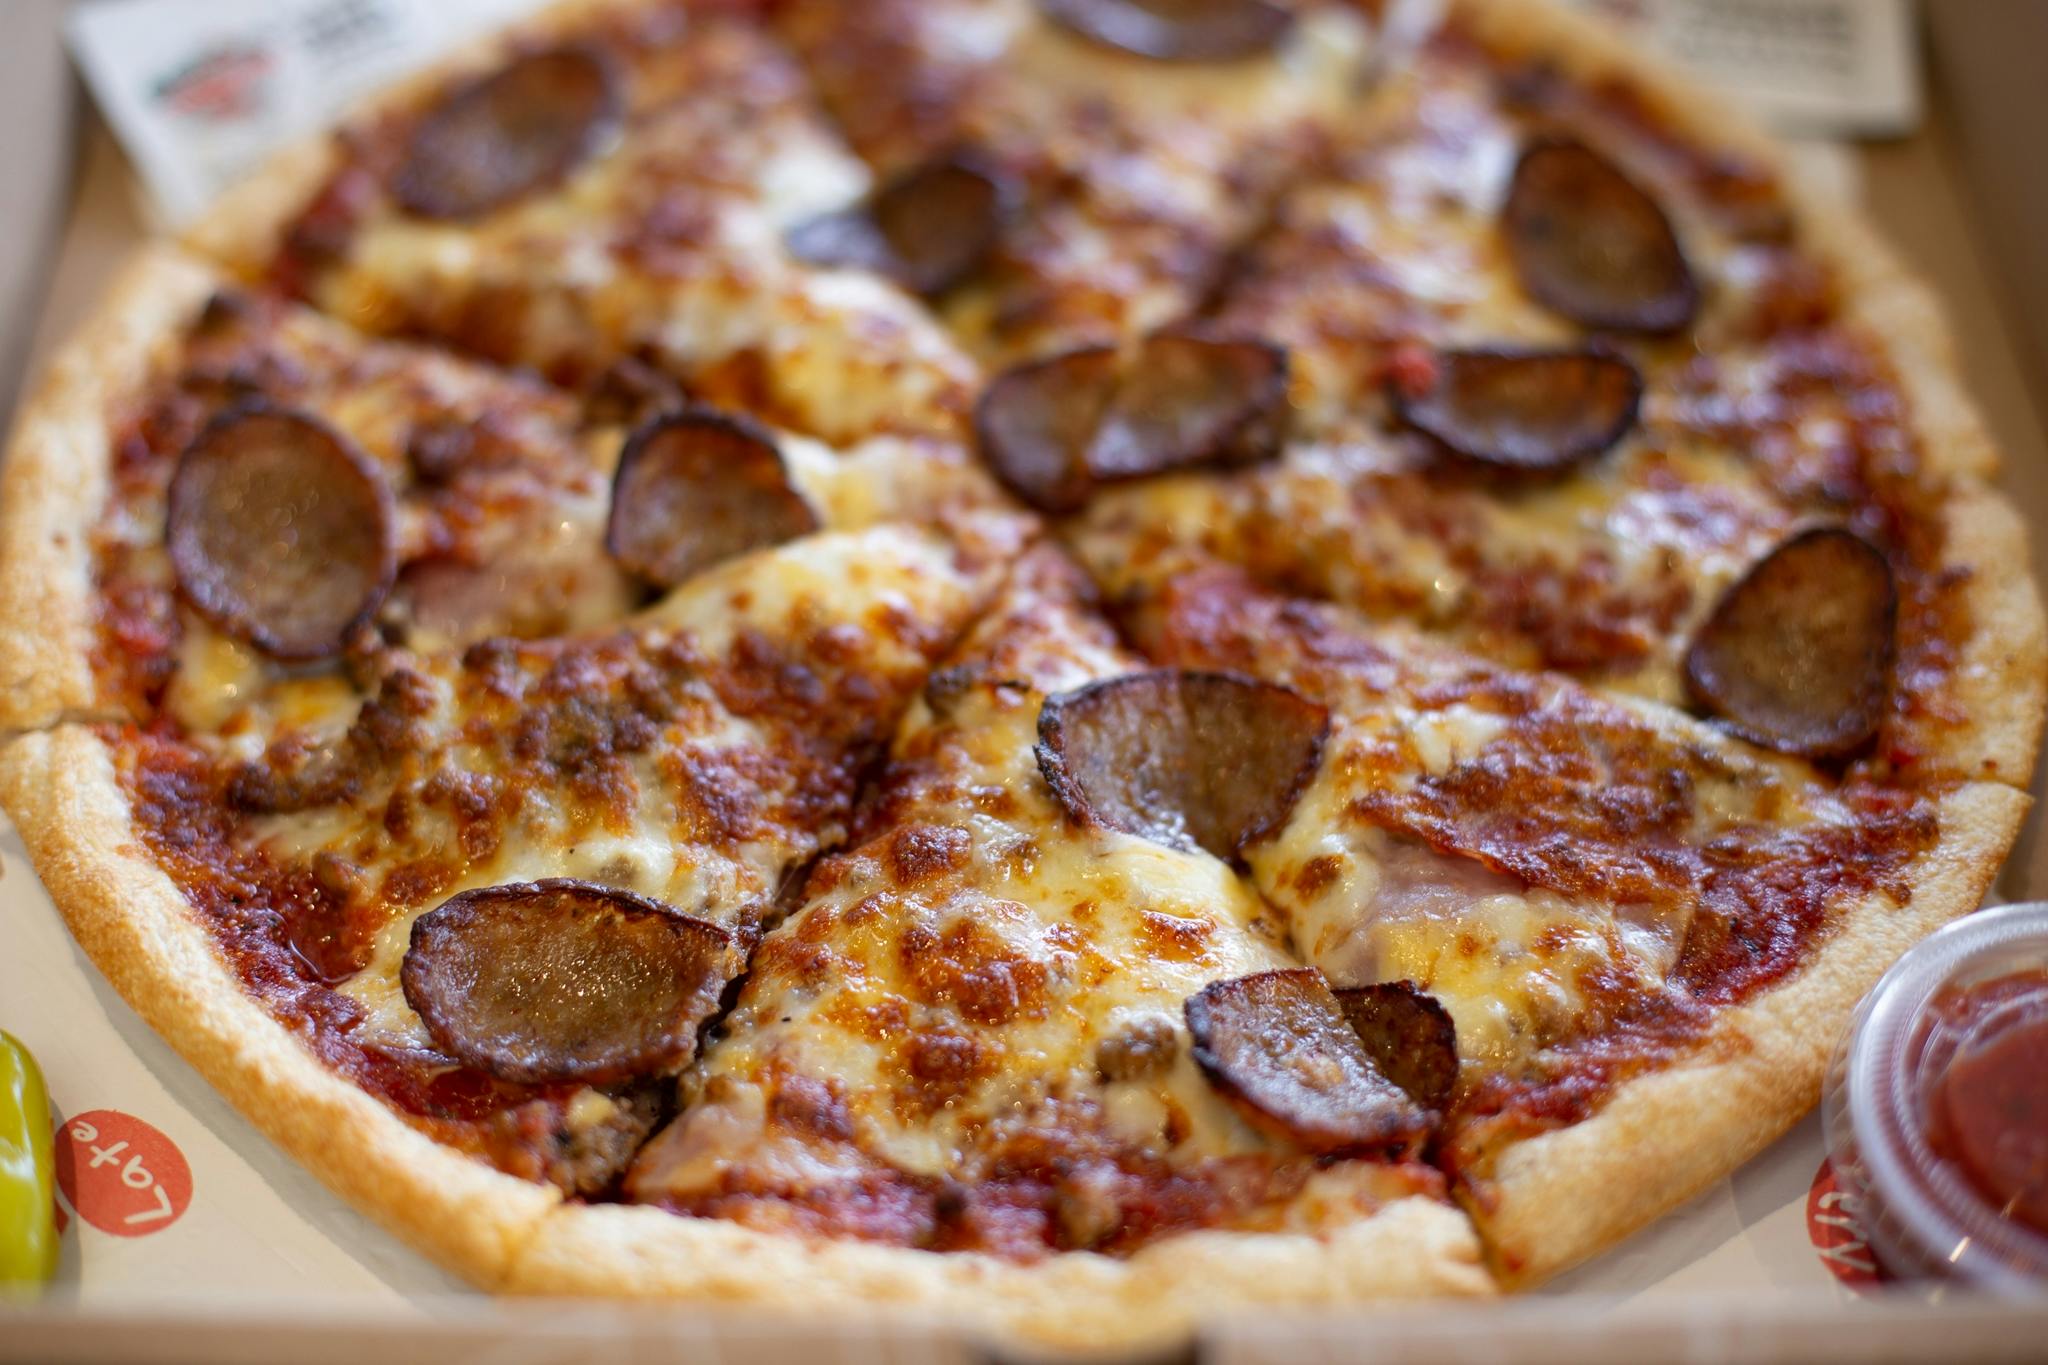 New York Deli Pizza from Sarpino's Pizzeria - Washington Ave. in Minneapolis, MN